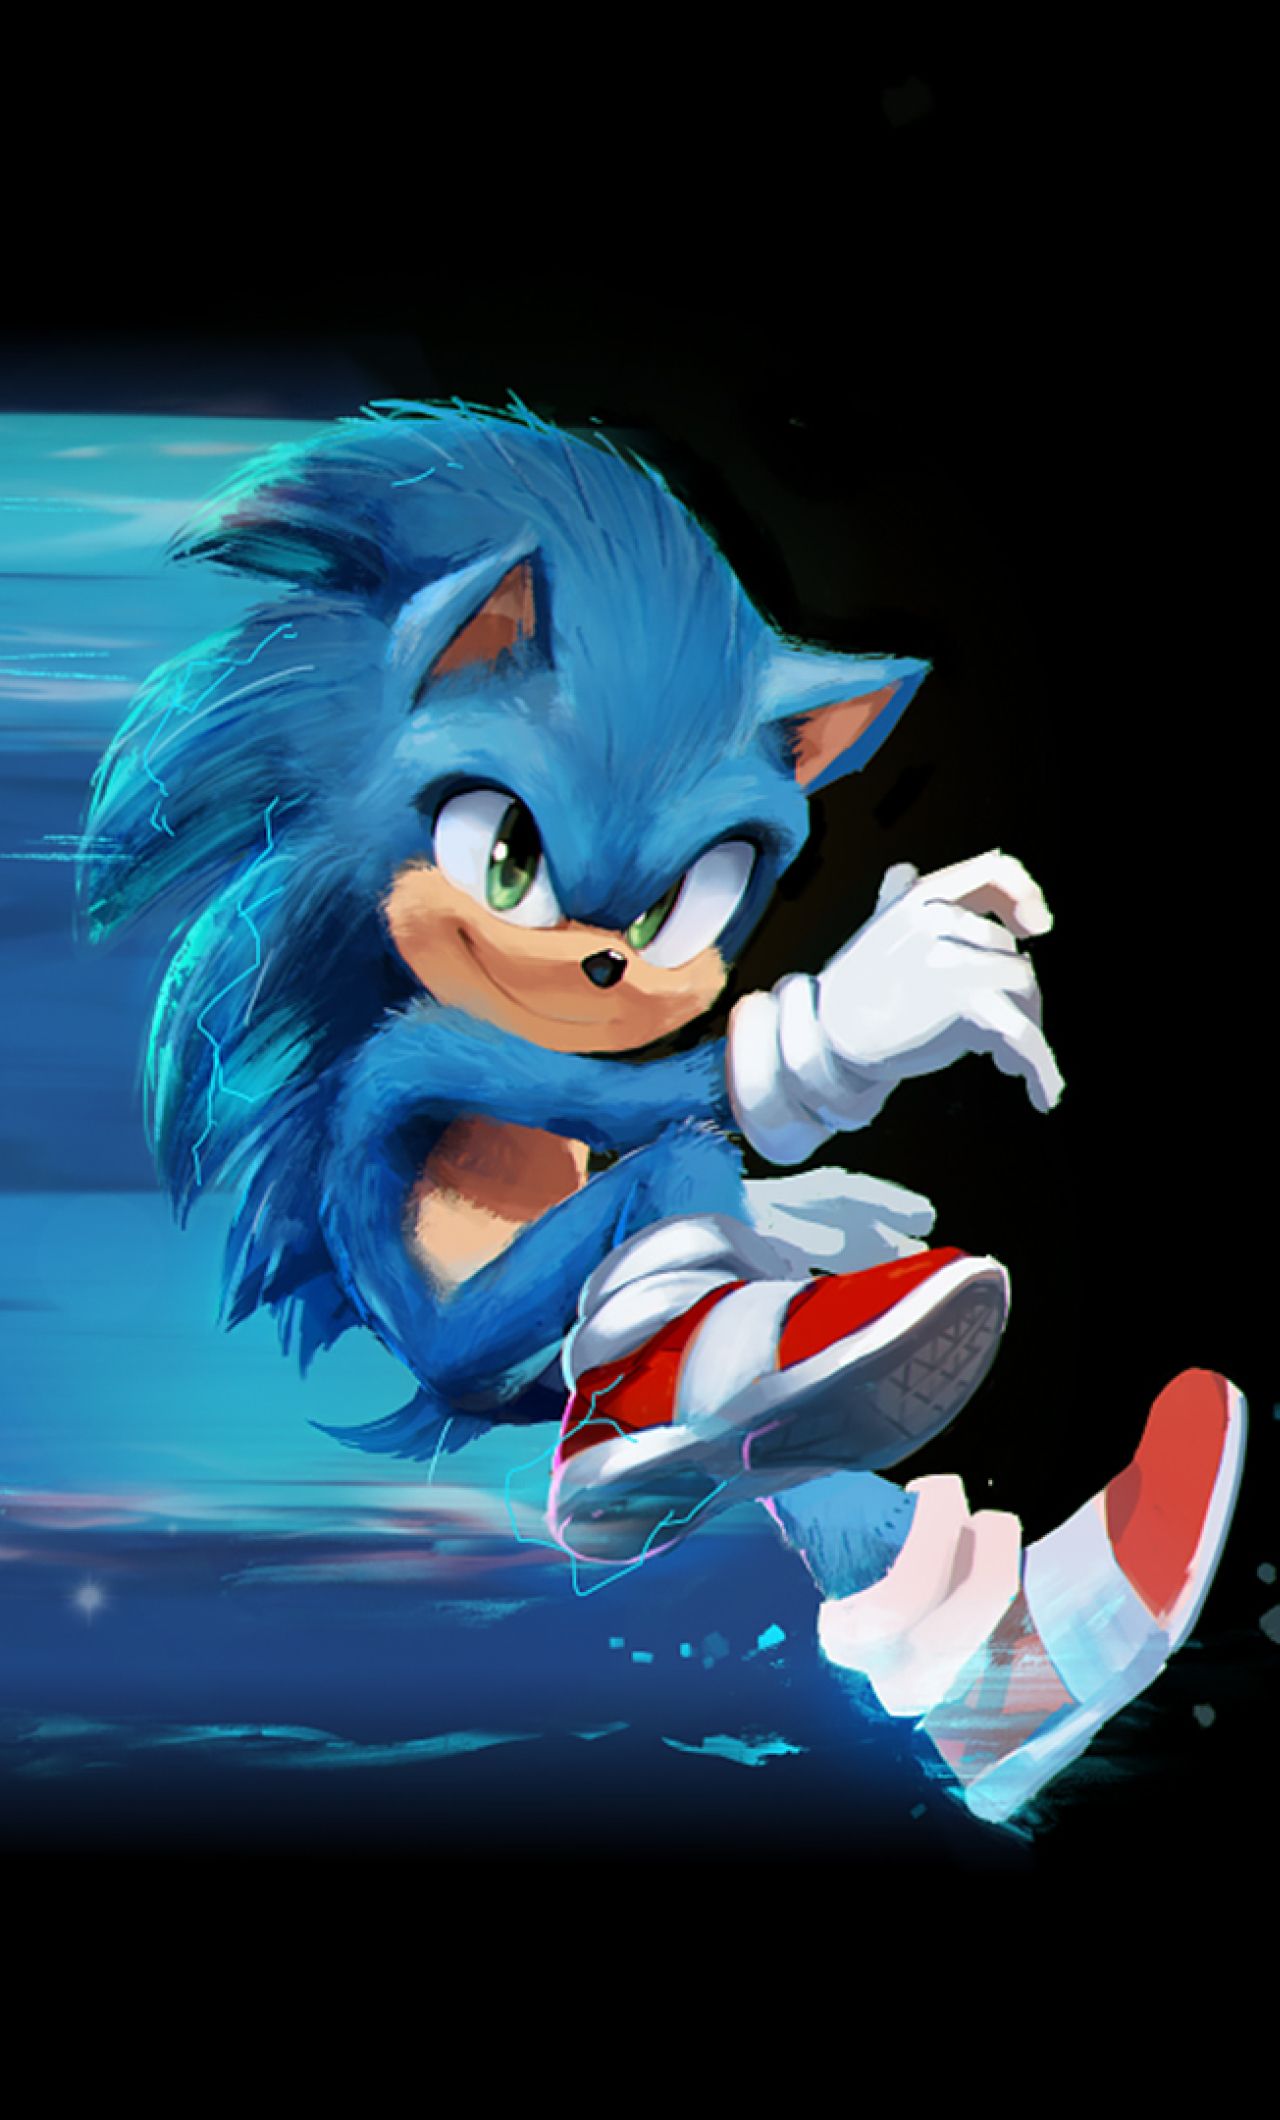 Sonic the Hedgehog Artwork iPhone 6 plus Wallpaper, HD